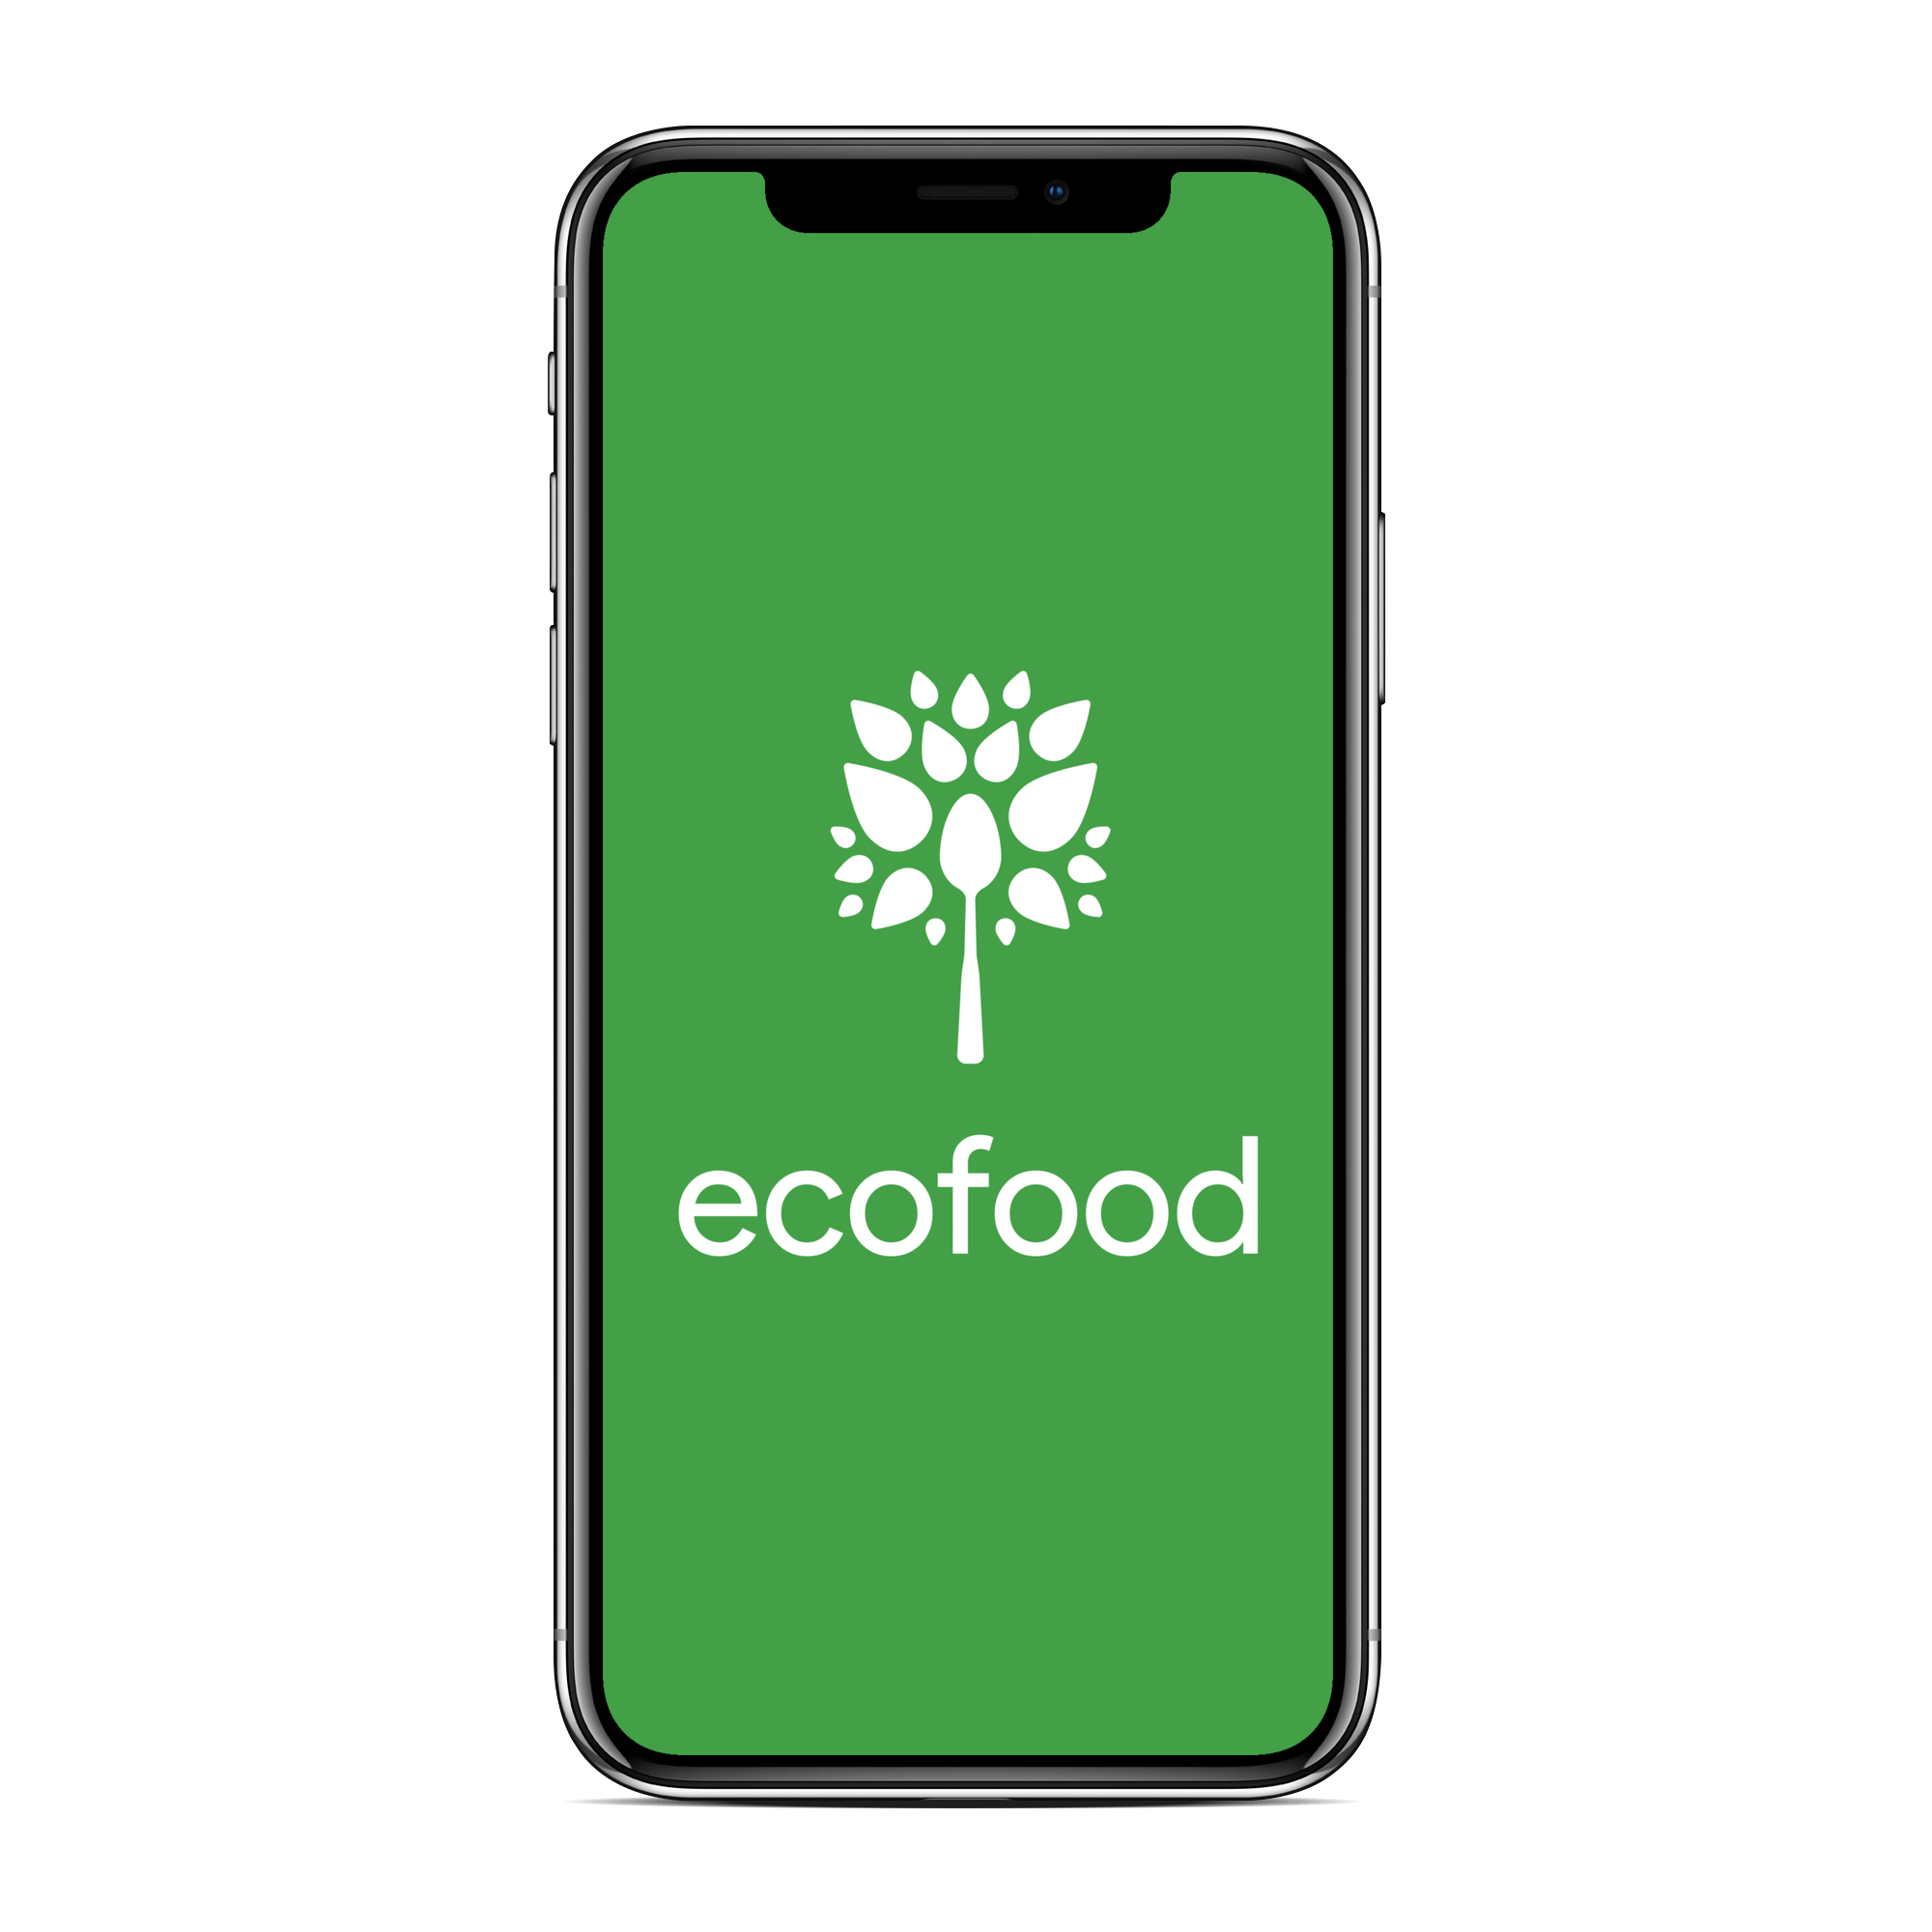 ecofood app on iPhone